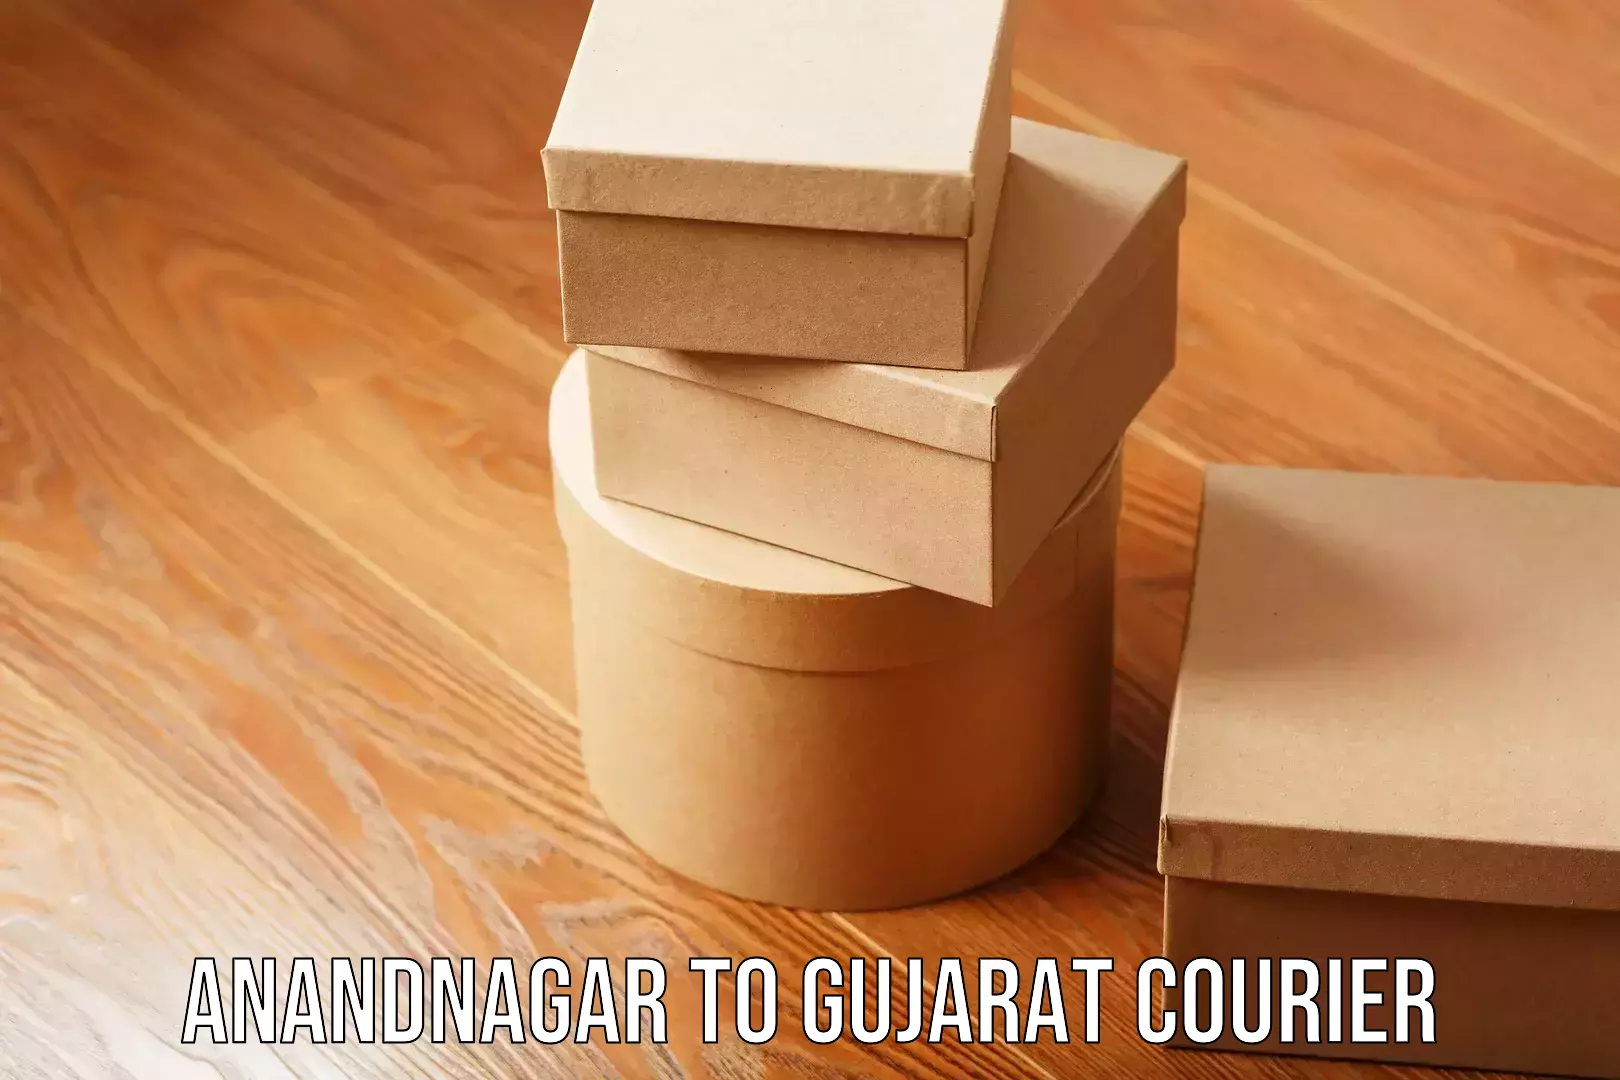 Seamless shipping experience Anandnagar to Gujarat